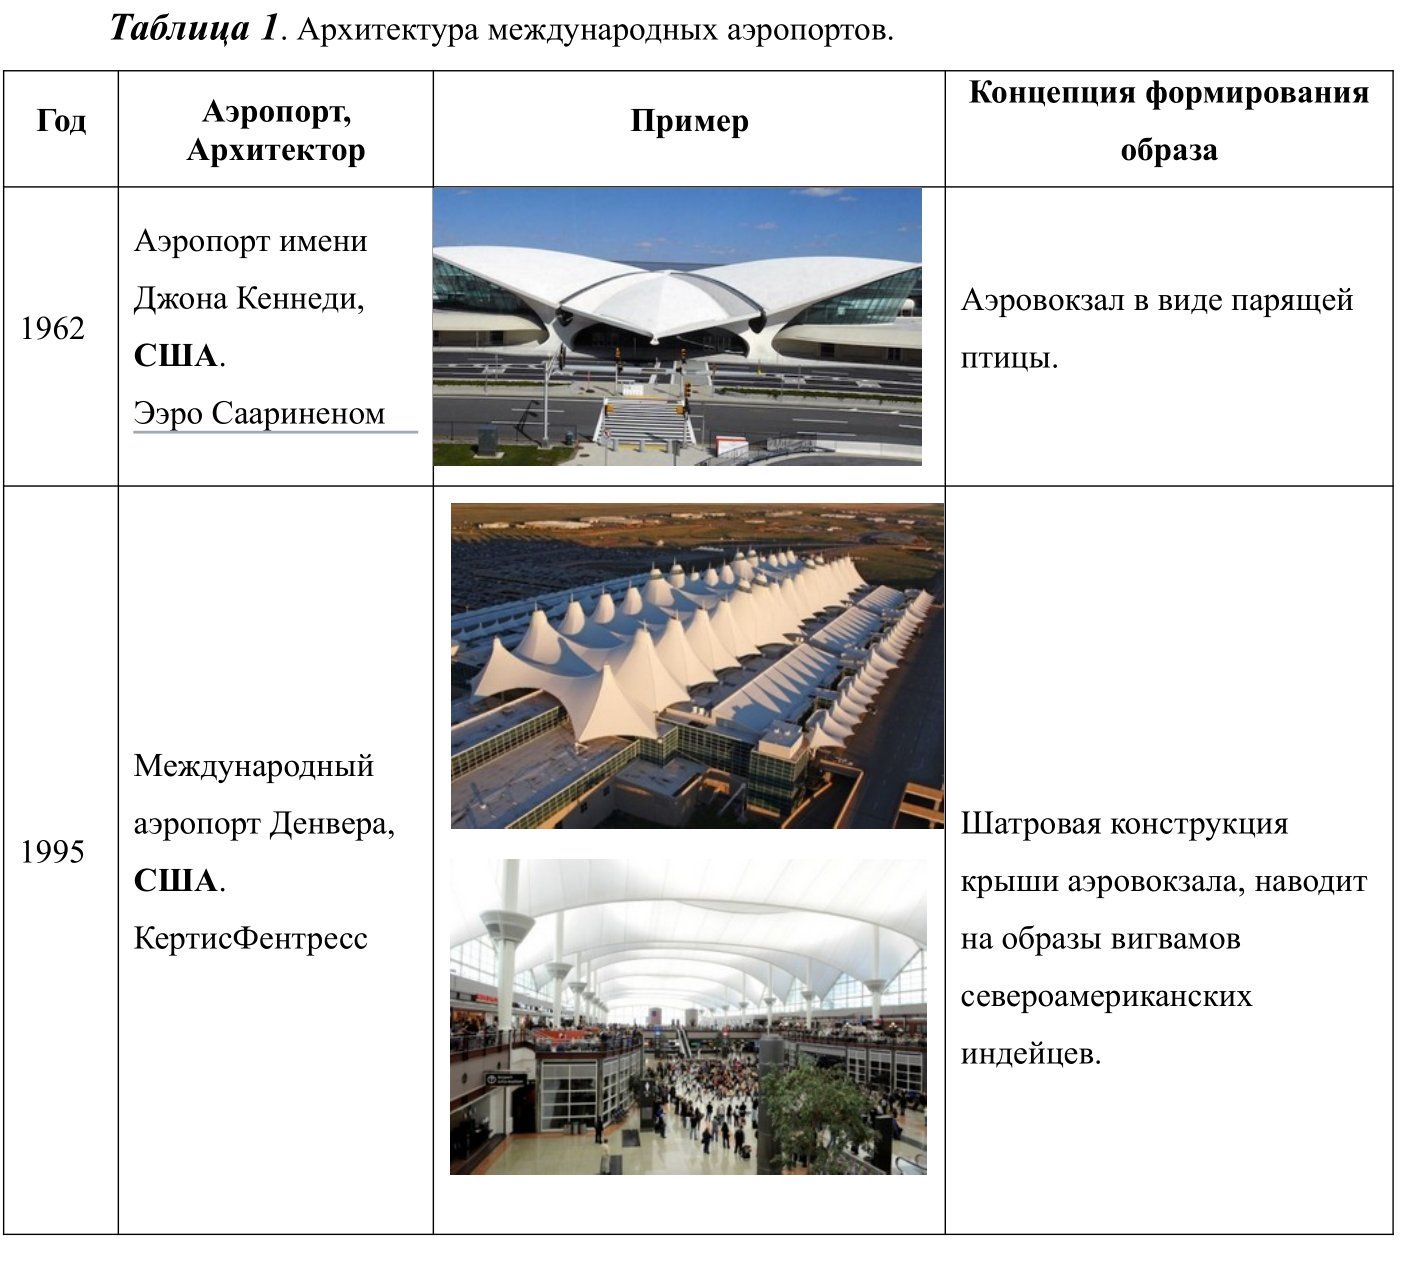 Таблица 1-1. Архитектура международных аэропортов.